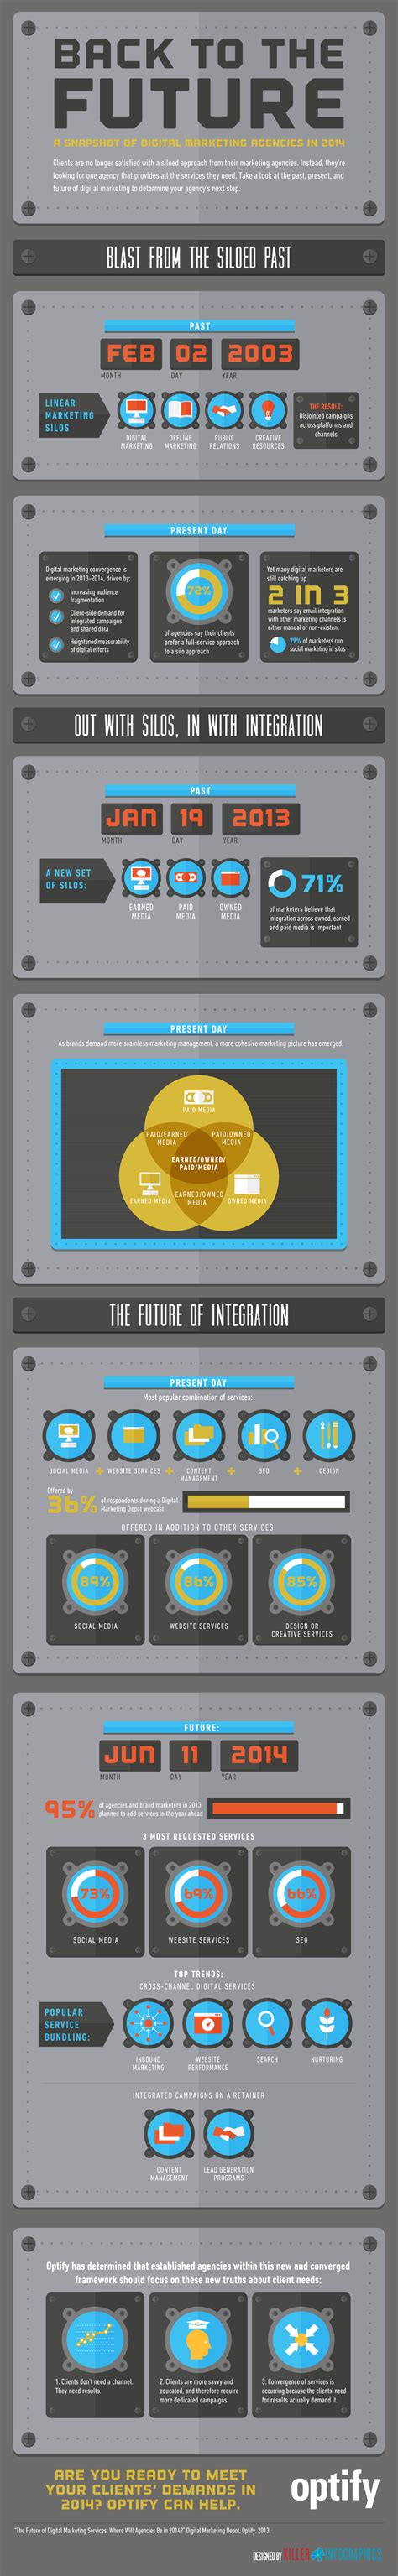 snapshot  digital marketing agencies   infographic visualistan